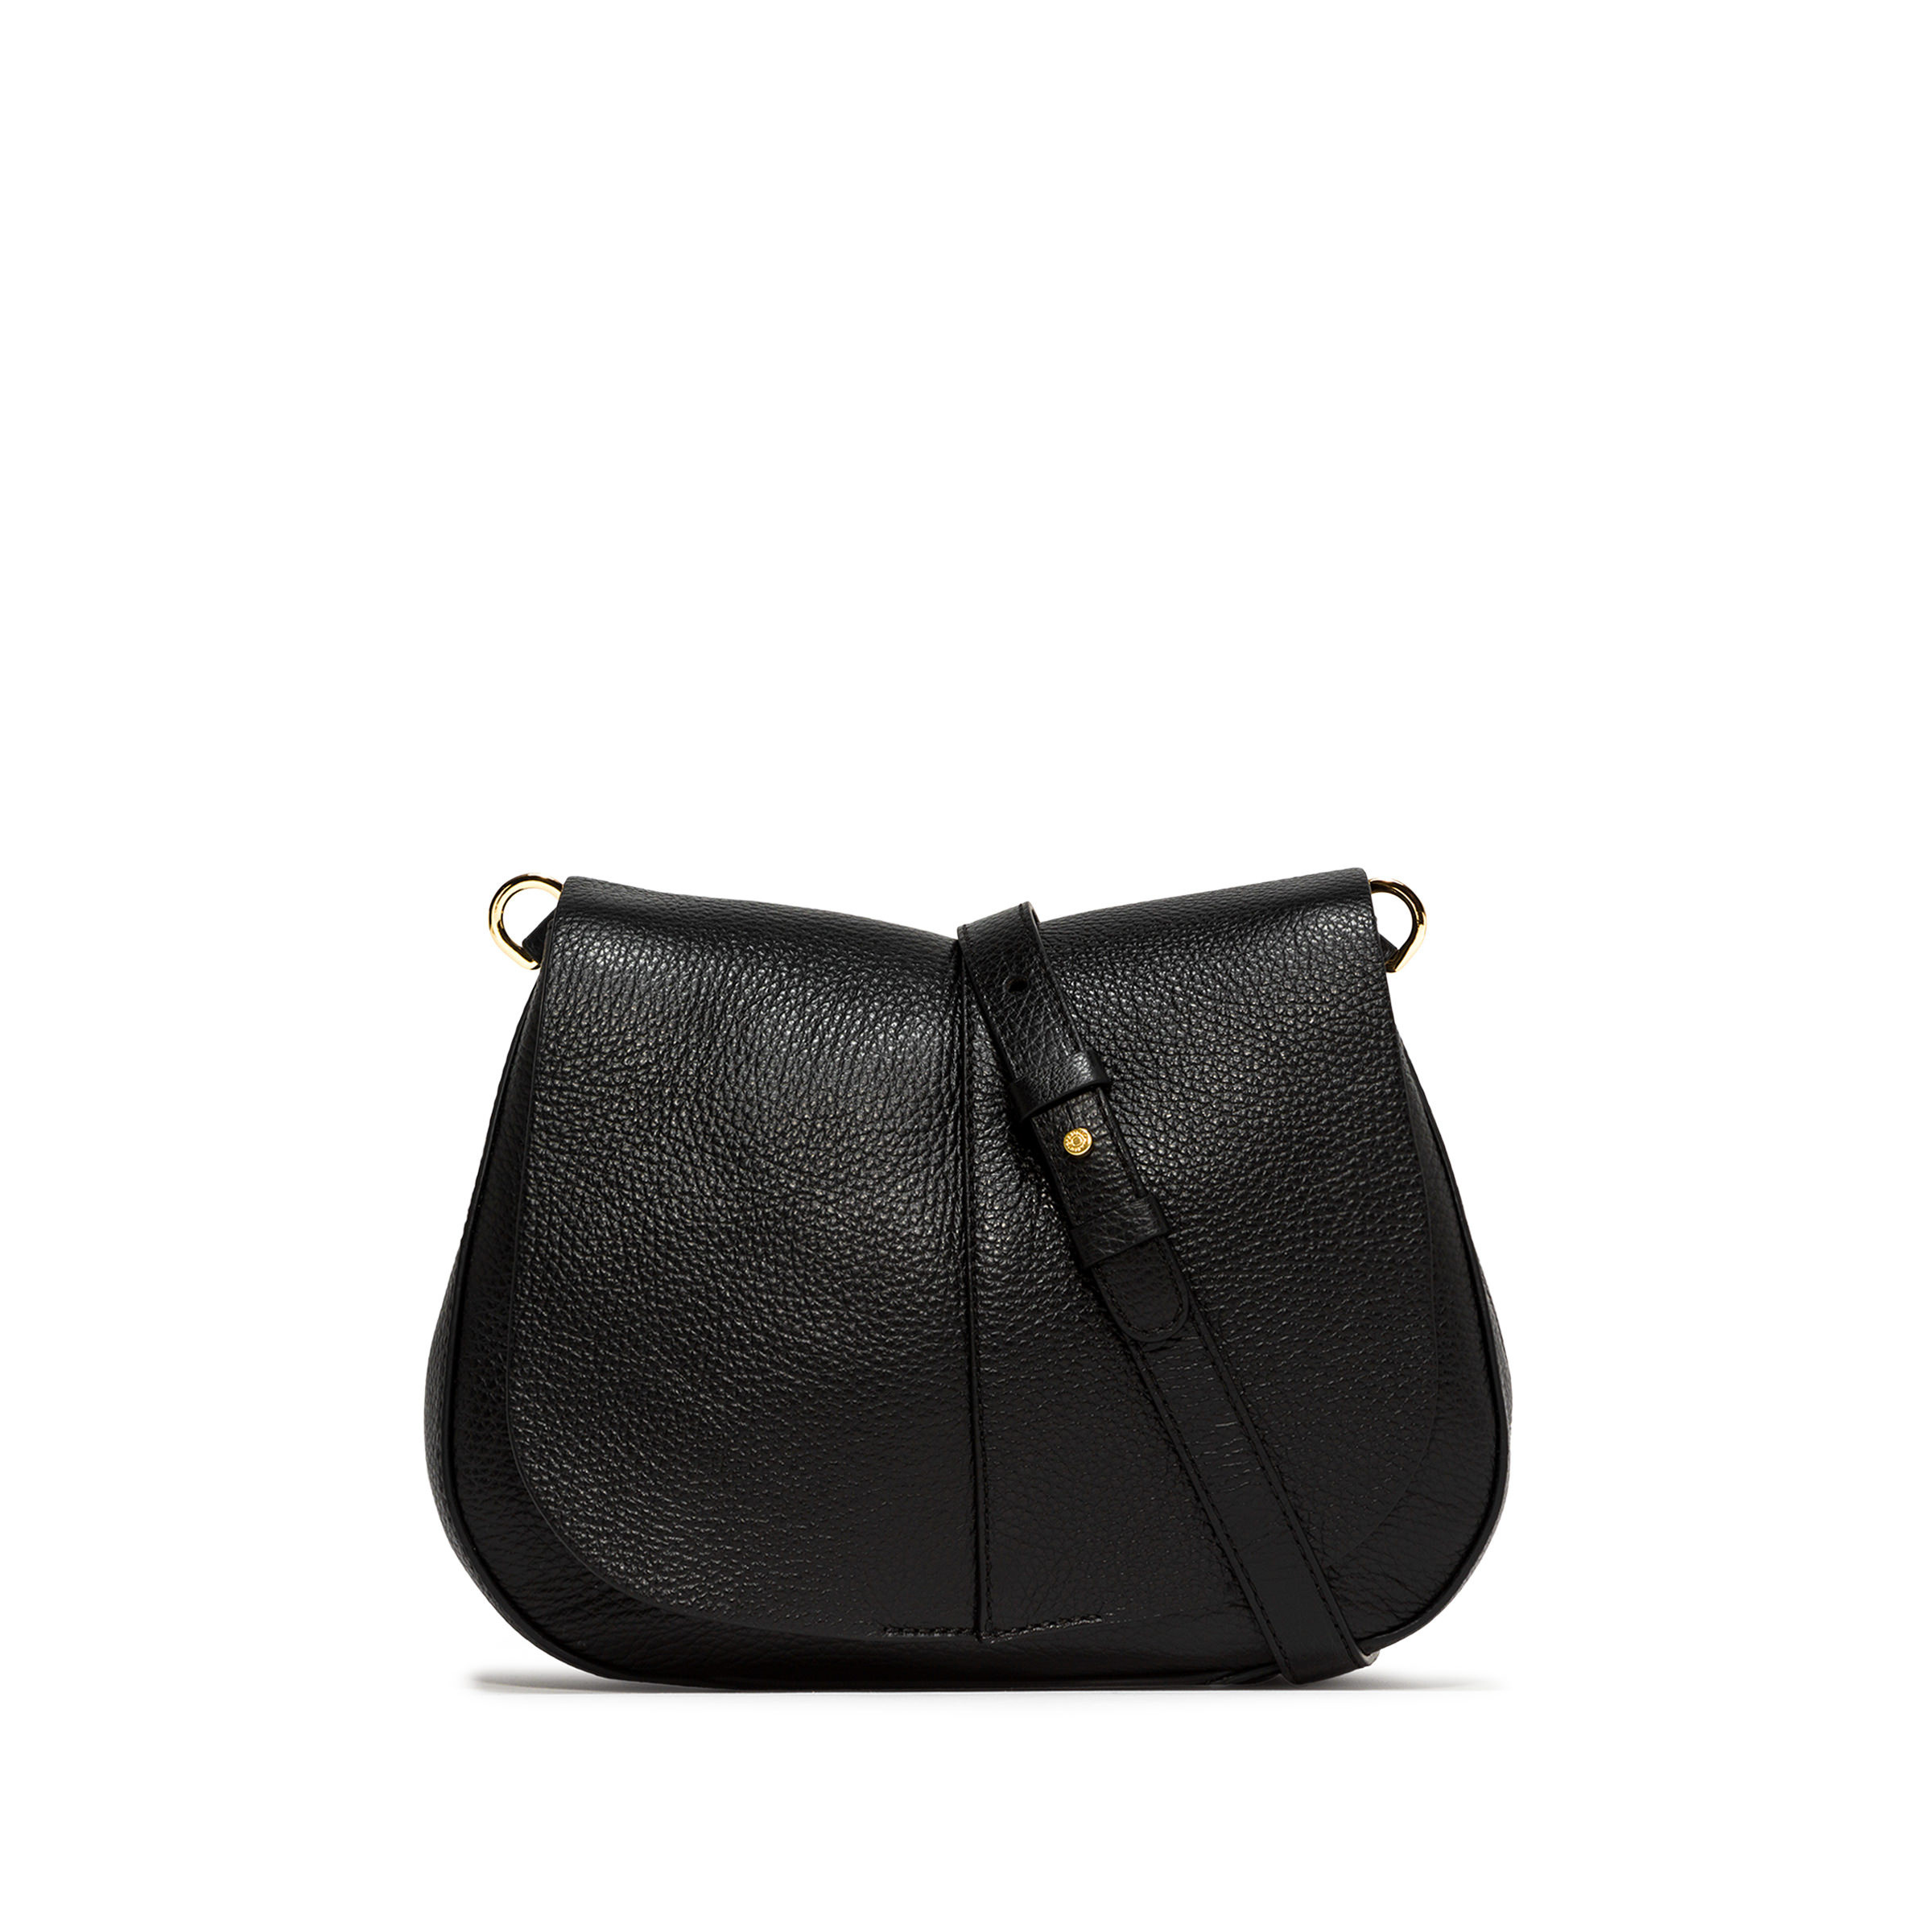 Gianni Chiarini - Helena Round bag in leather, Black, large image number 0